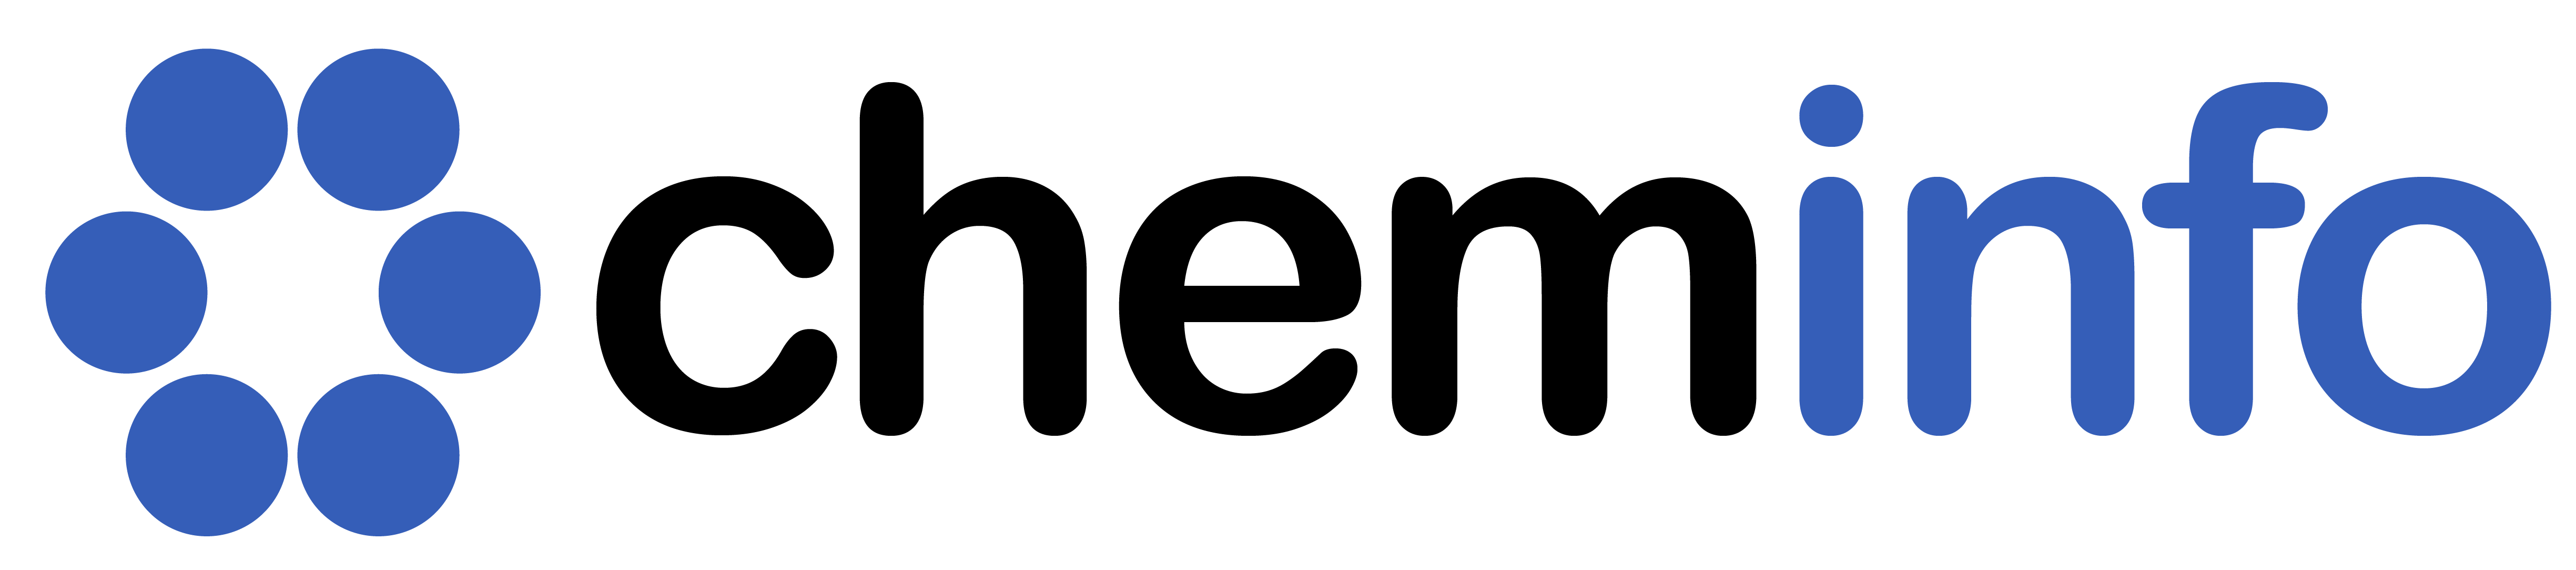 Cheminfo logo